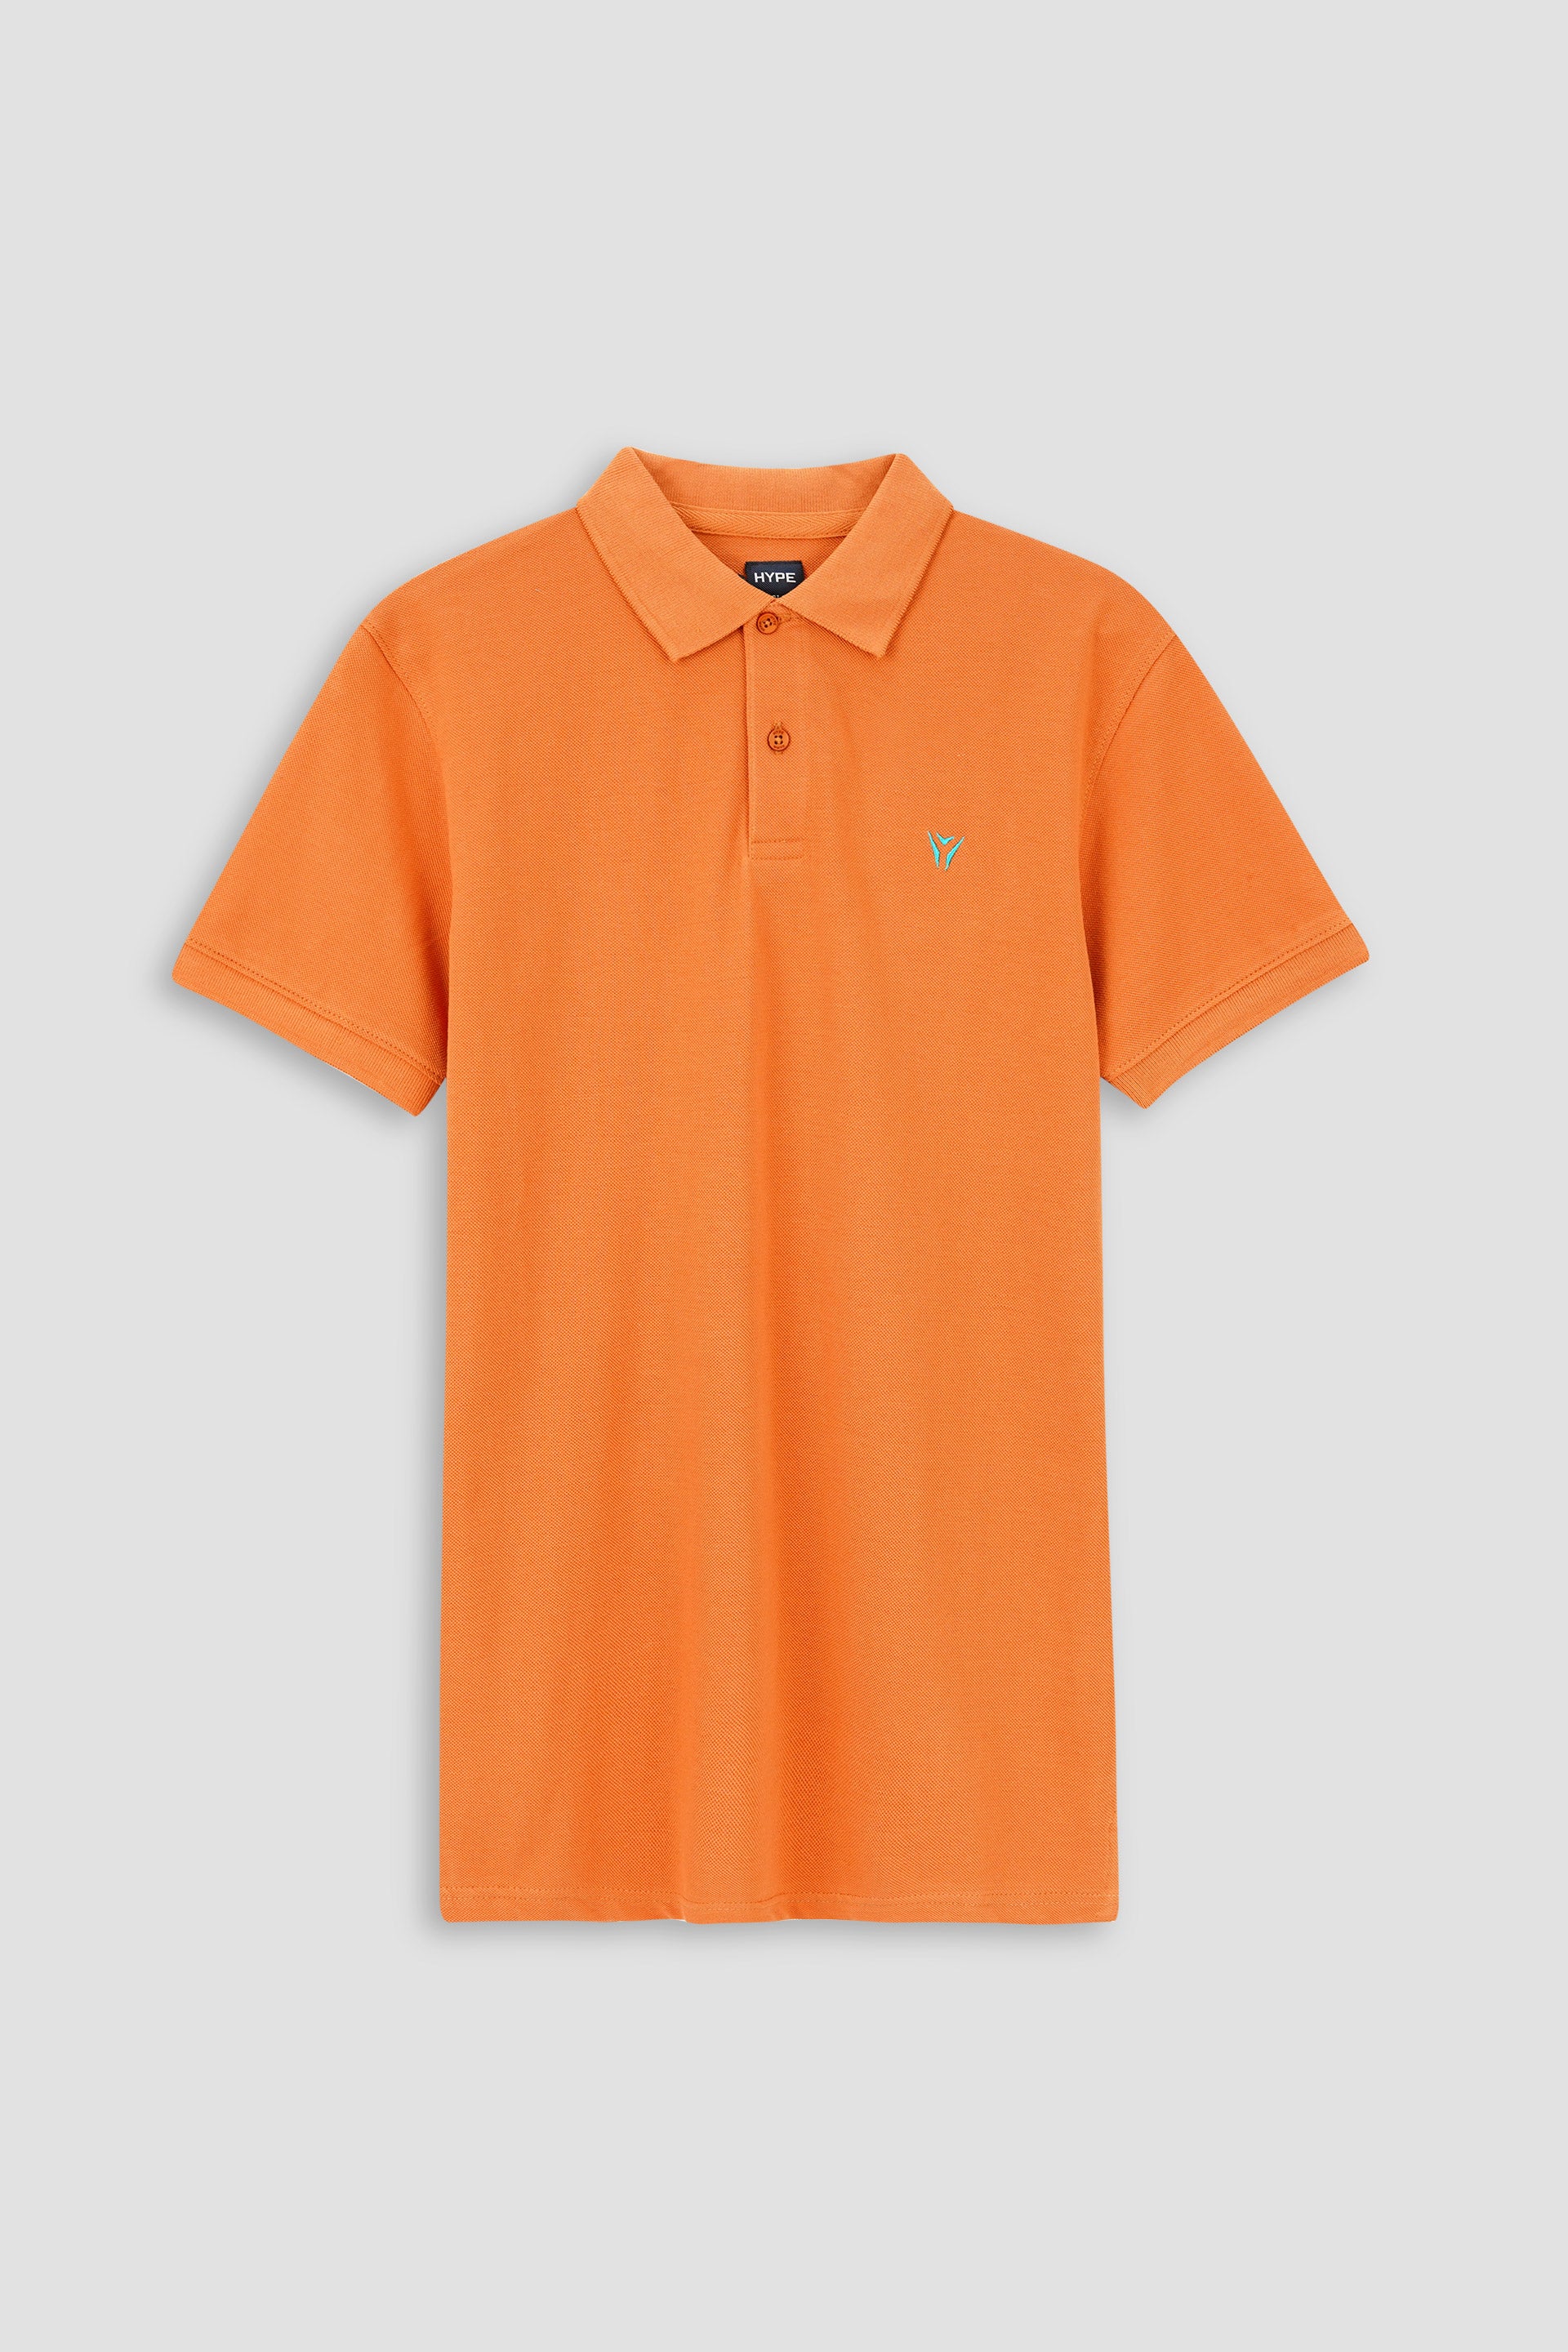 Embroidered Orange Pique Polo Shirt 002417